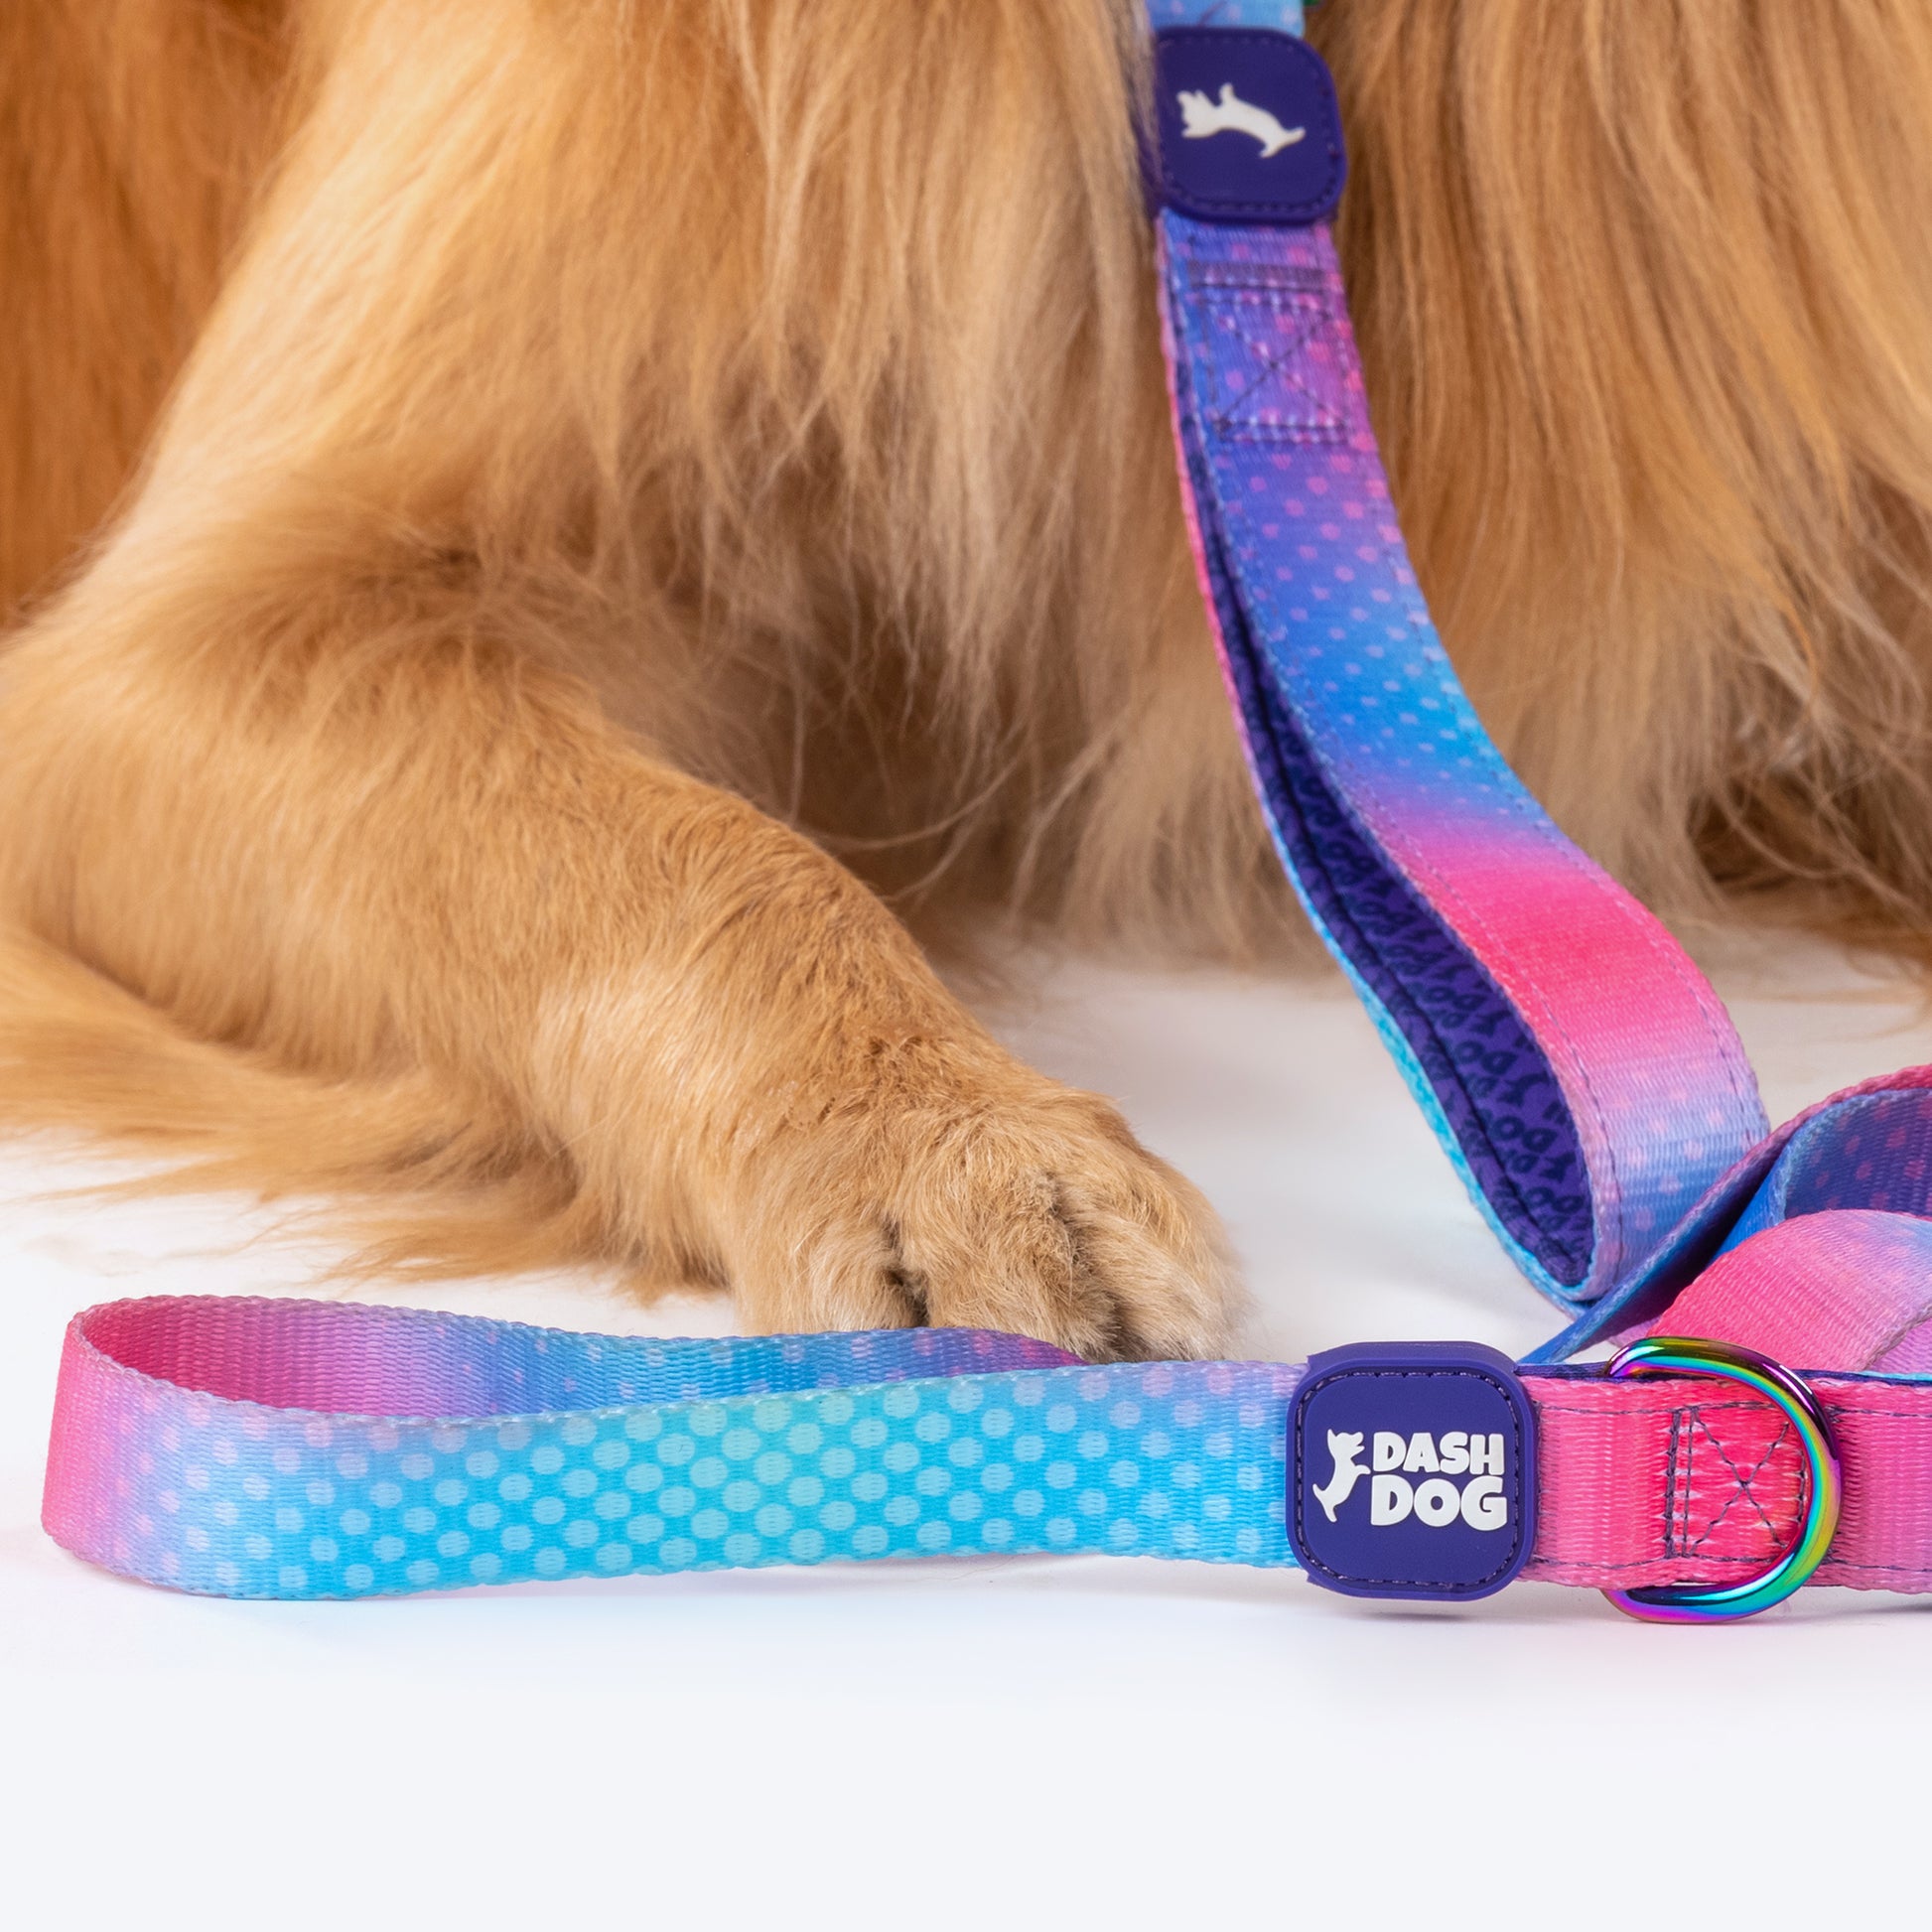 Dash Dog Flow Printed Leash - Pink & Aqua Blue - Heads Up For Tails